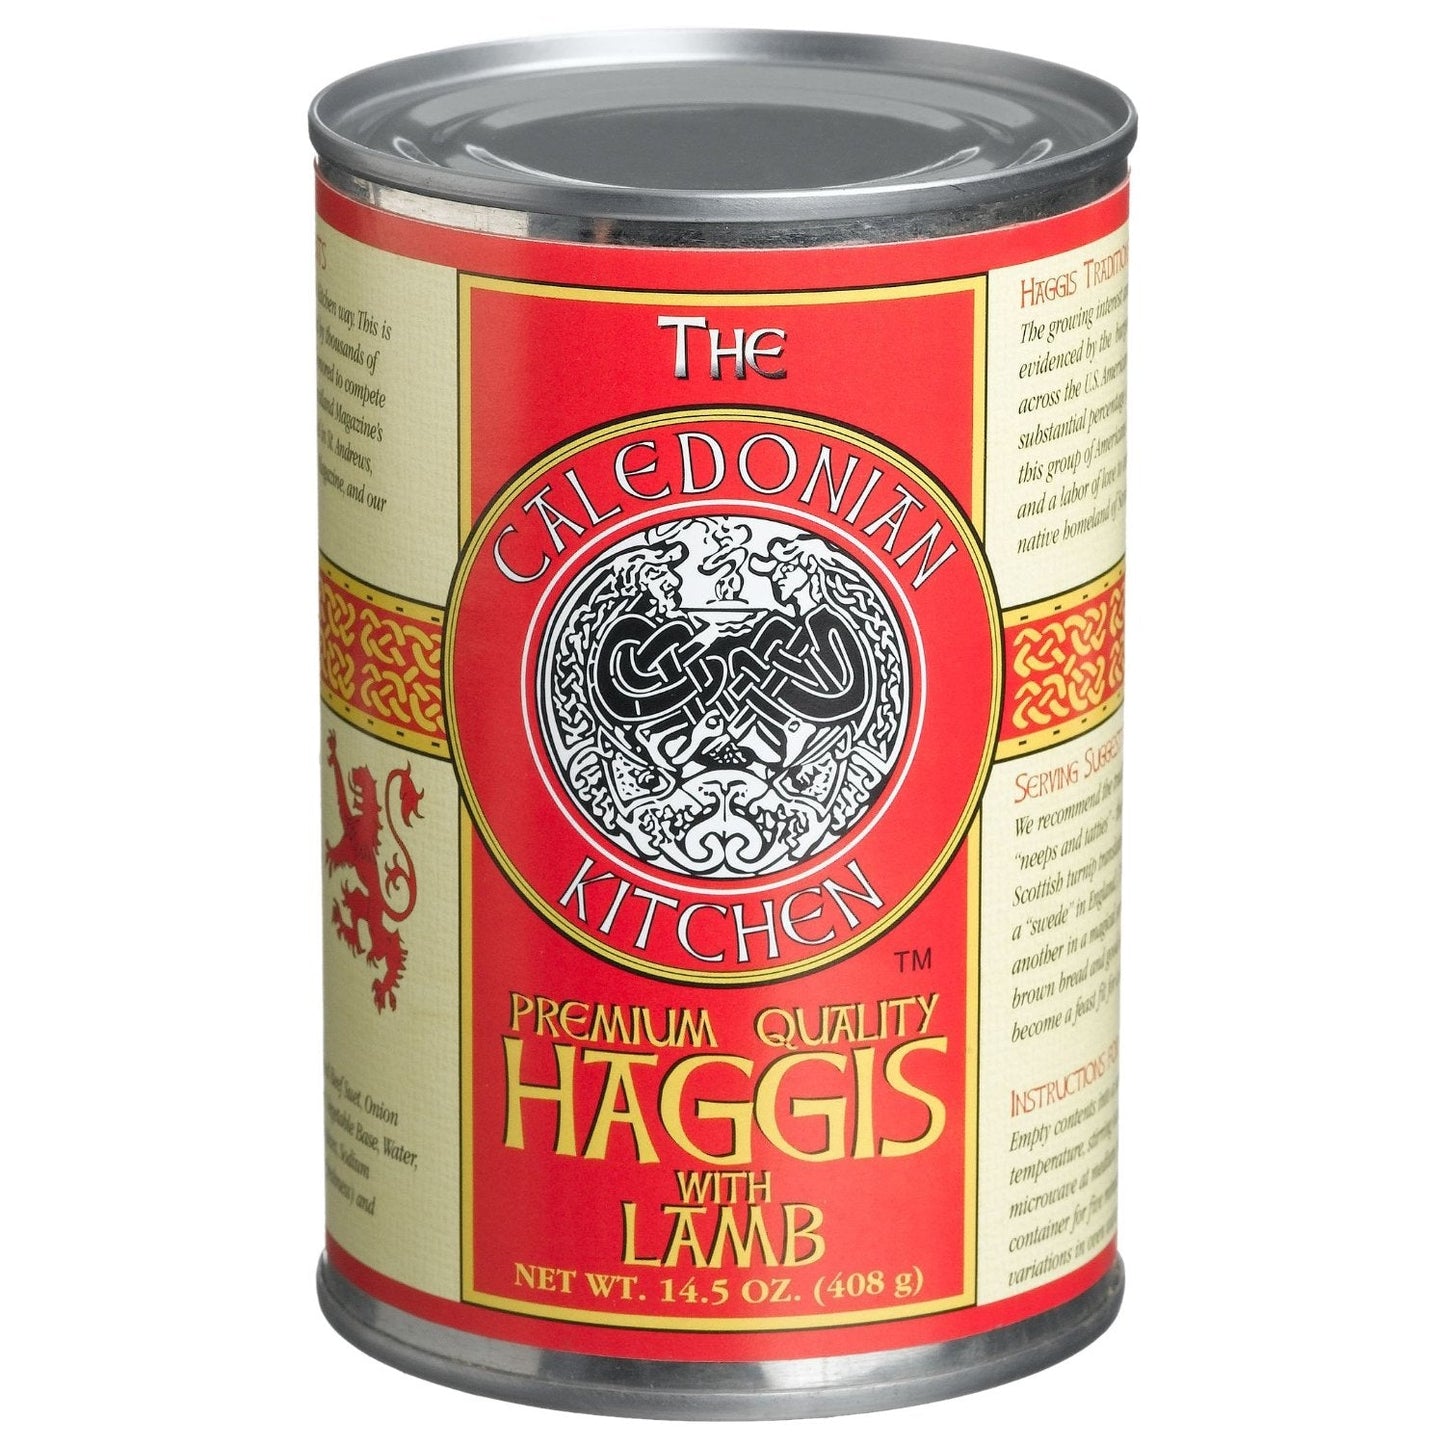 Caledonian Kitchen: Haggis with Lamb 408g (14.5oz)